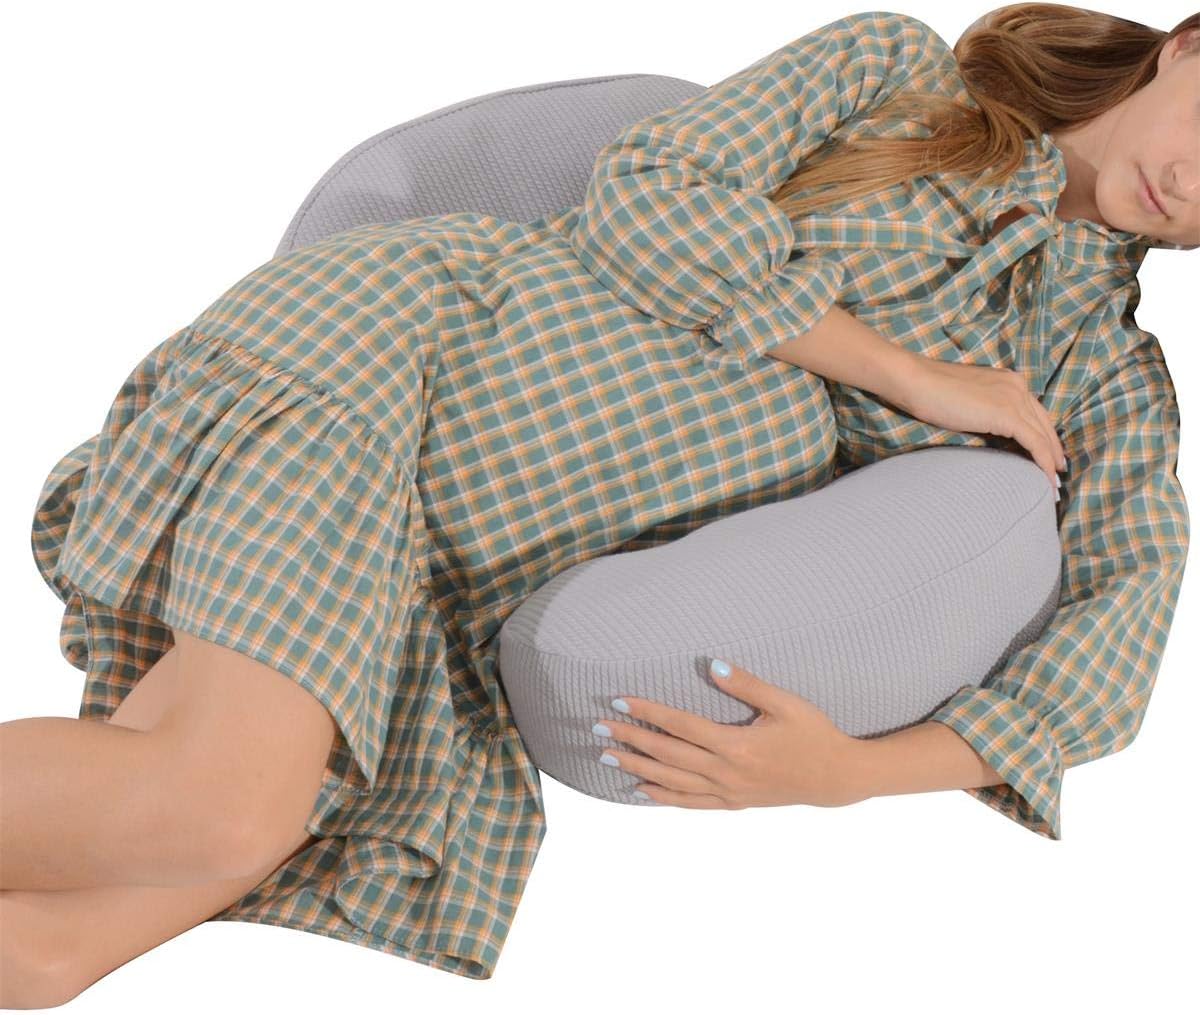 SIMINZICH Side Sleeper Pregnancy Pillow Review